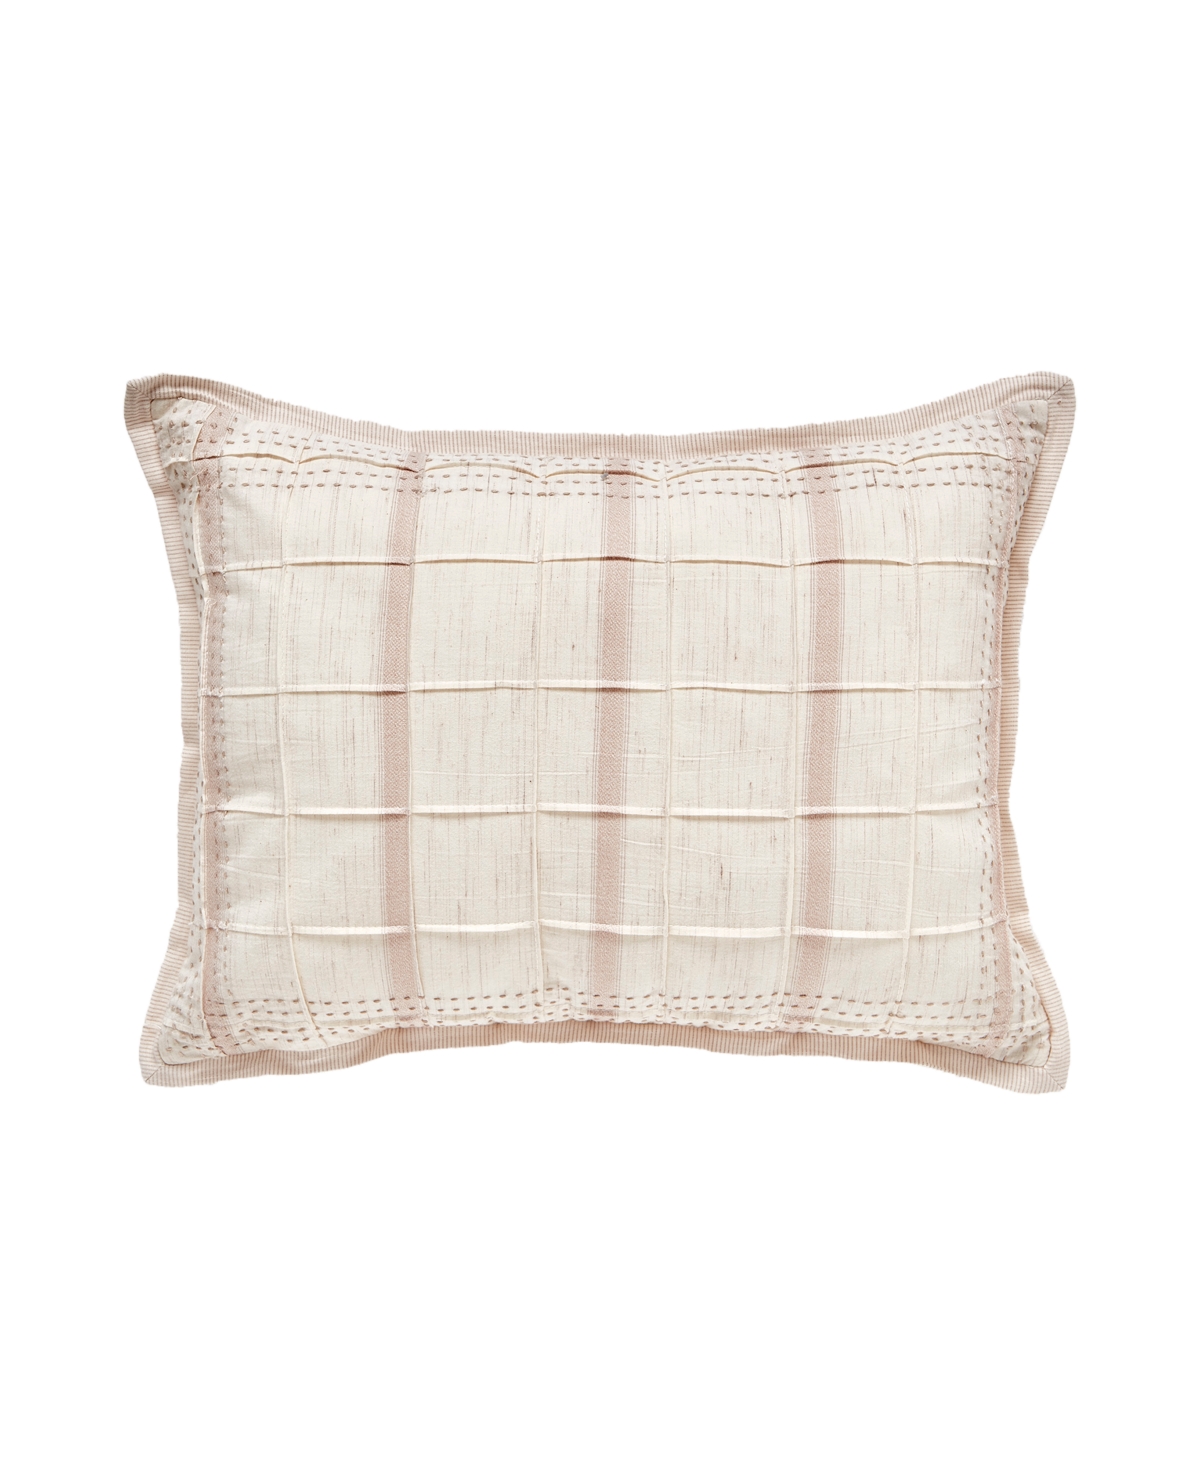 Splendid Elliot Decorative Cotton Pillow, 12" X 16" Bedding In Sugar